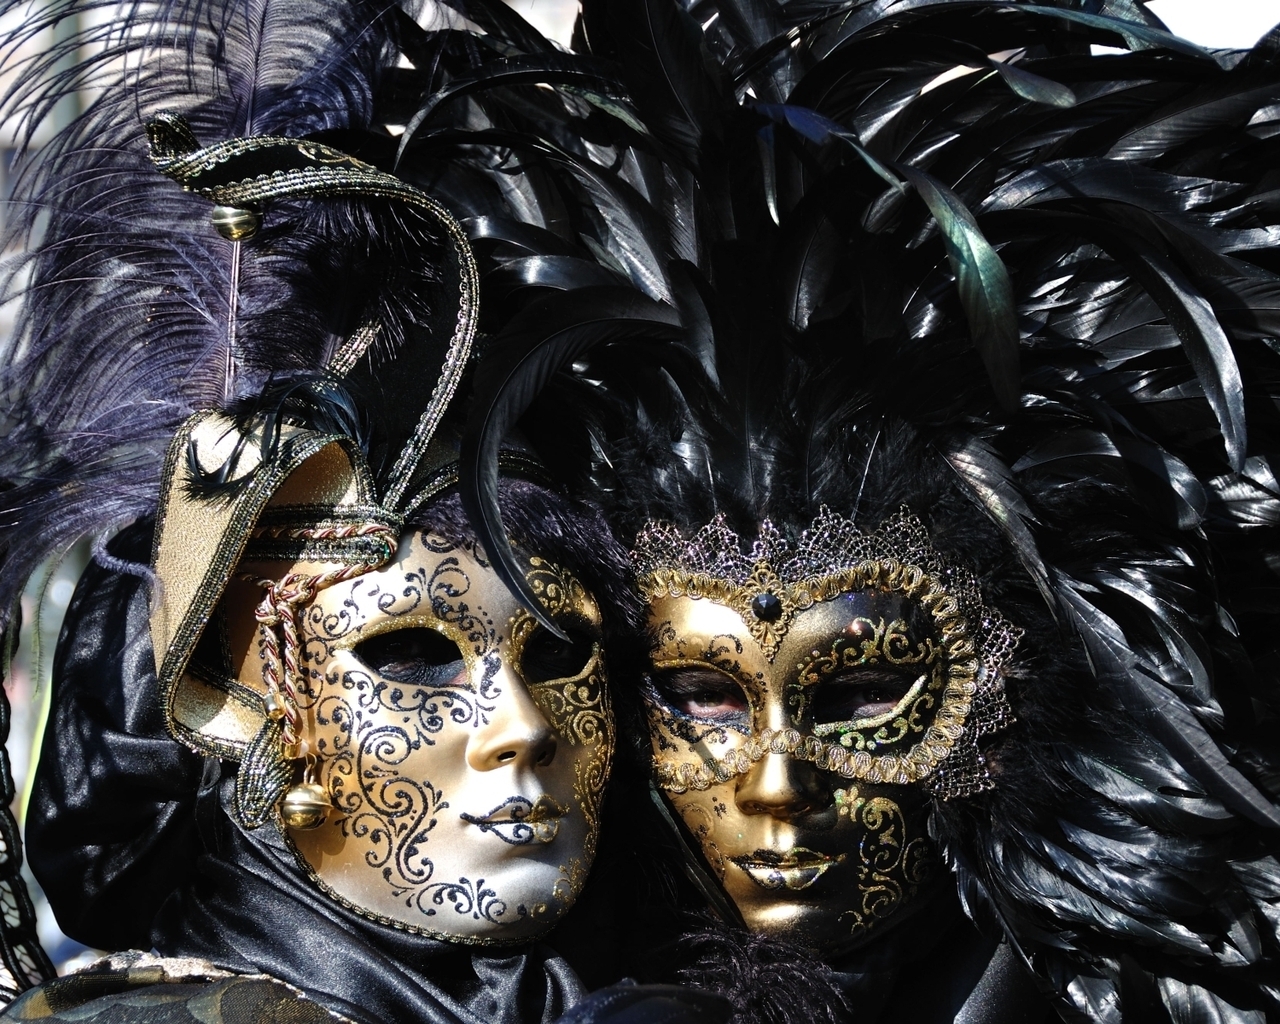 Venice Carnival Masks for 1280 x 1024 resolution